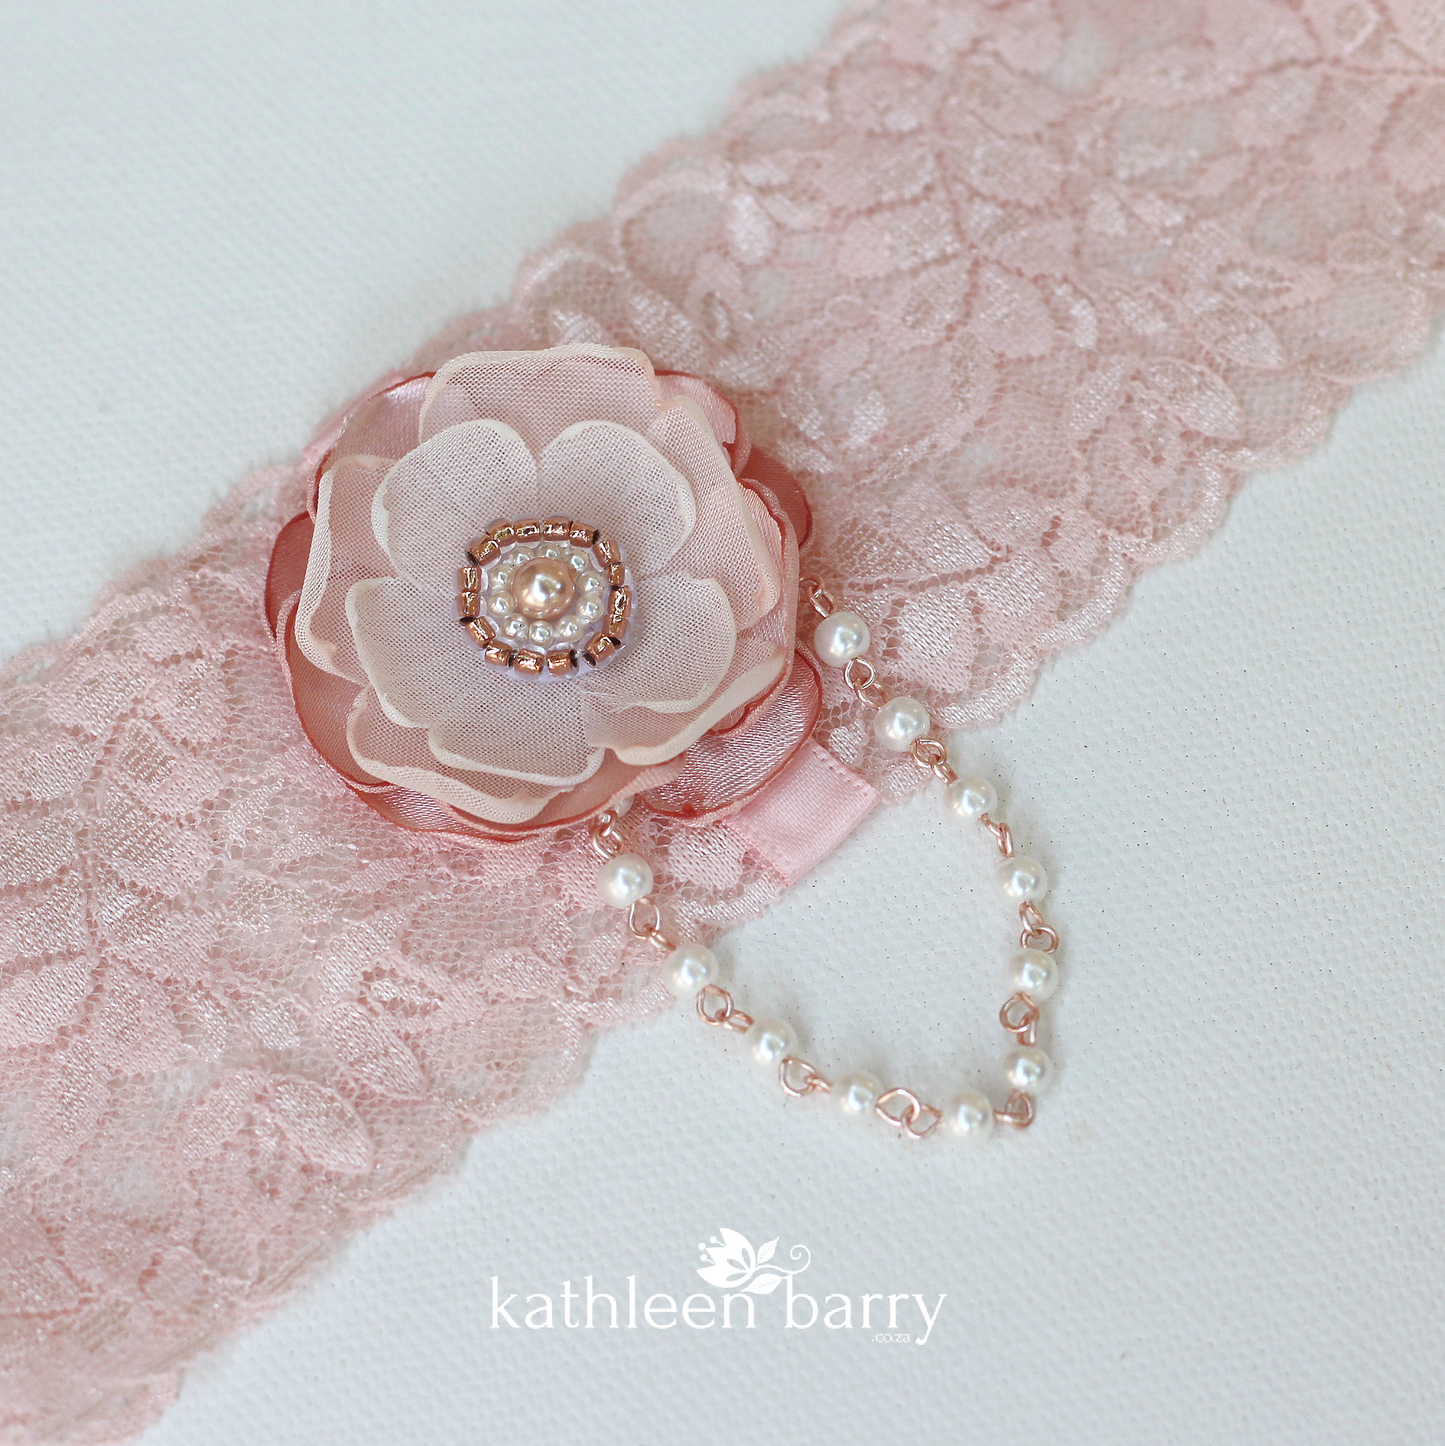 Kim Garter soft pink, pearl detailing - rose gold, gold or silver detailing